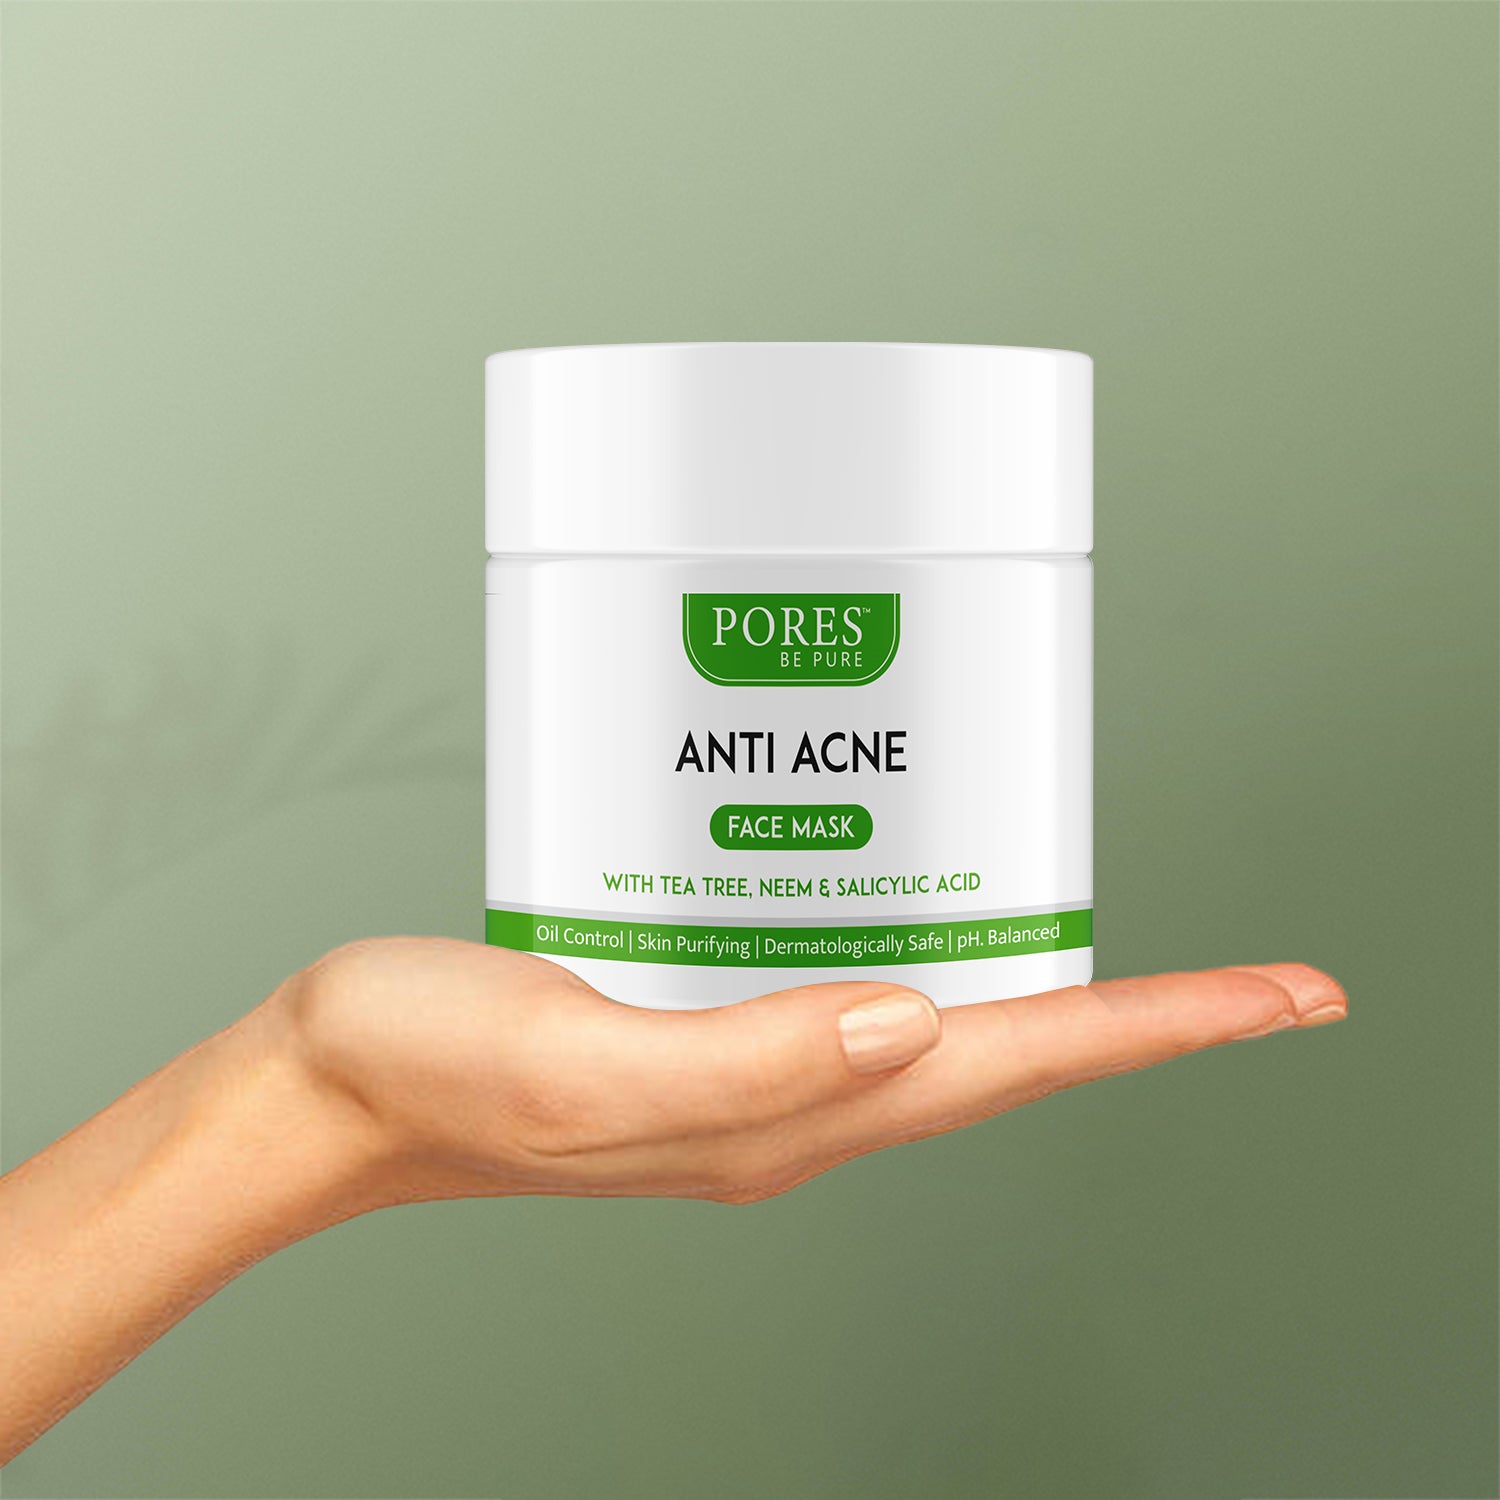 ANTI ACNE FACE MASK - With Tea Tree, Neem & Salicylic Acid -100 G